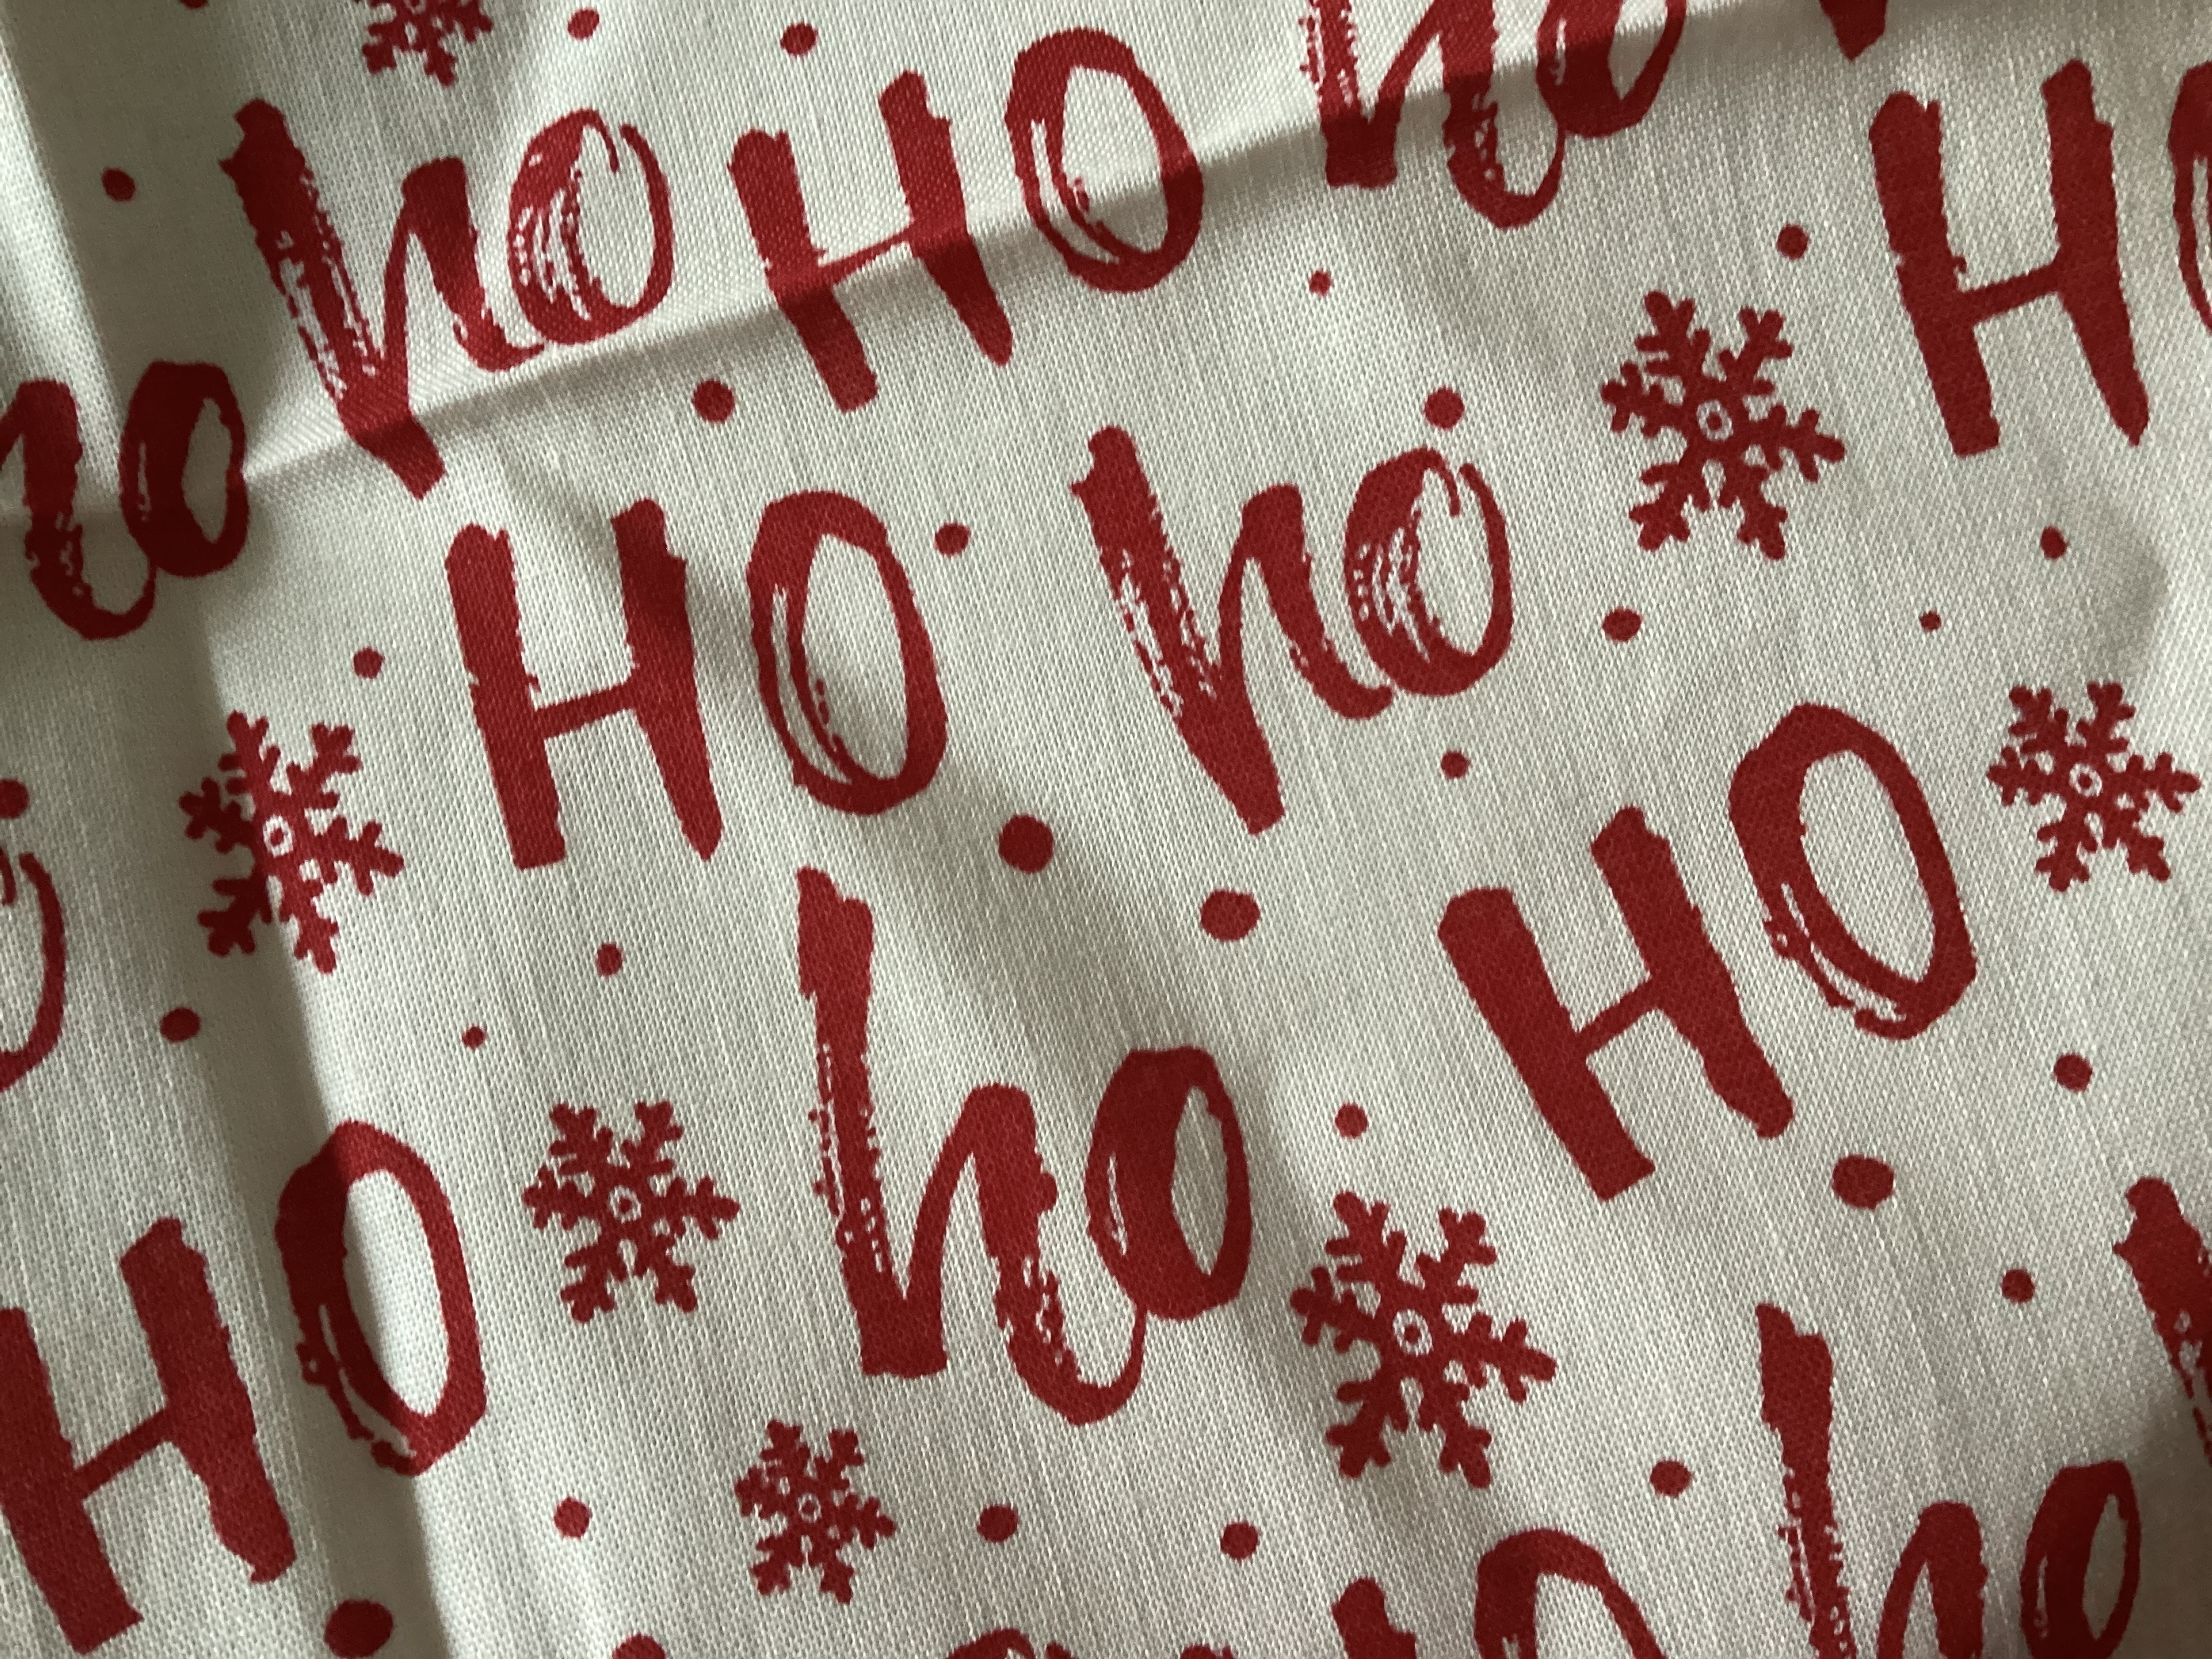 Christmas Napkins - ho ho ho